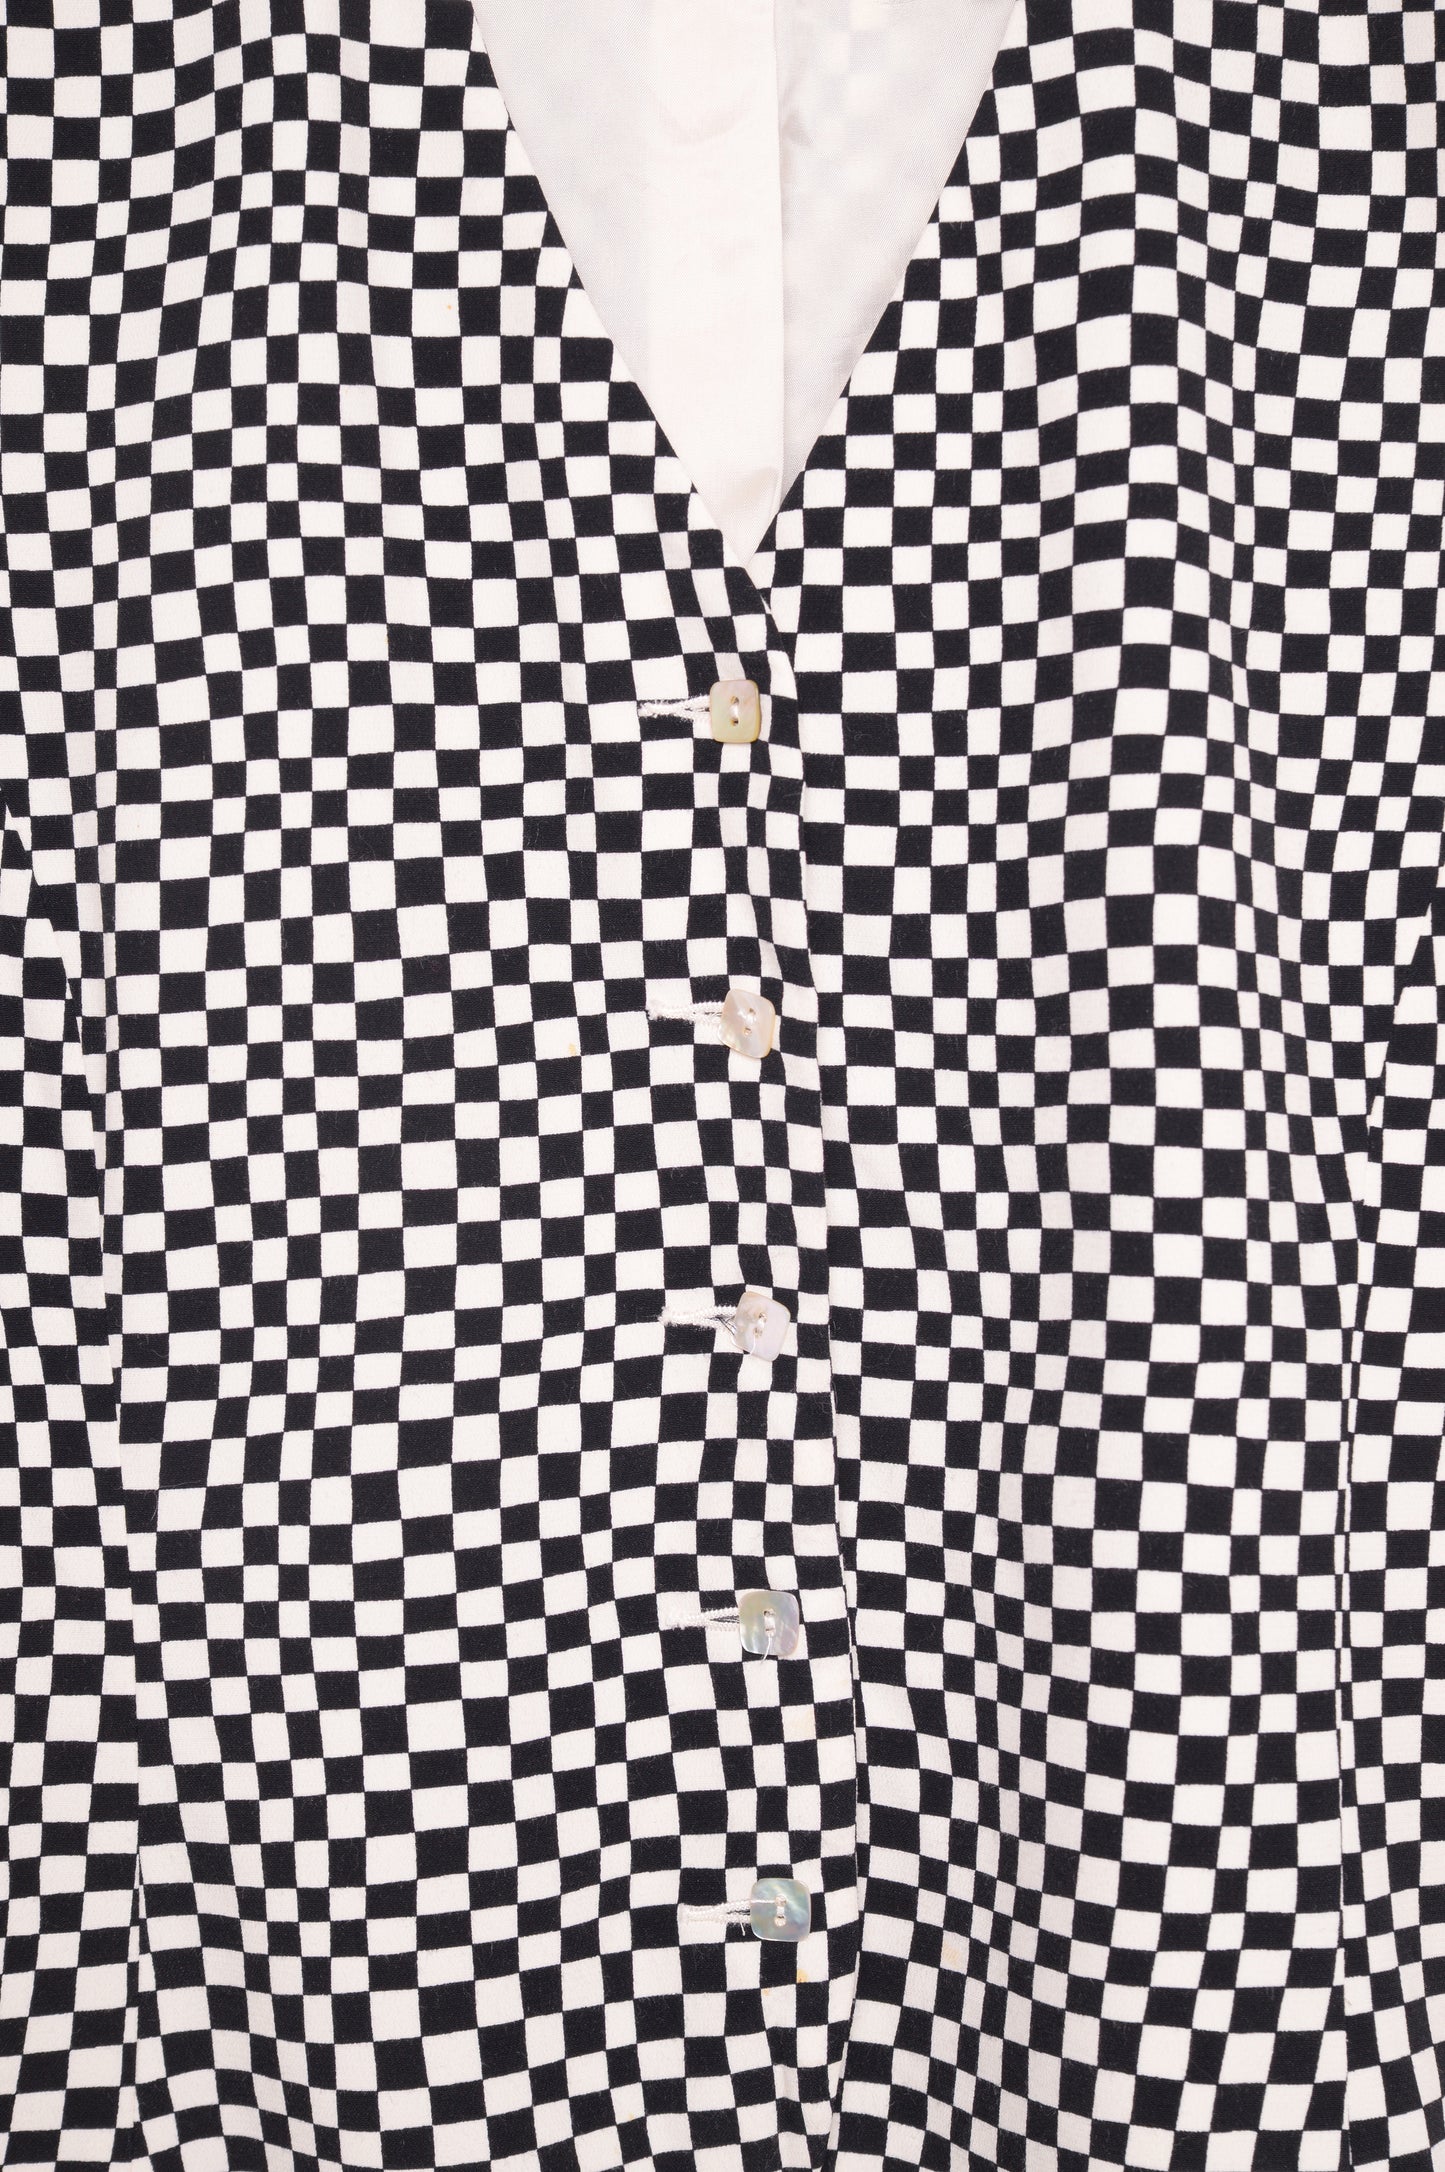 Checkered Vest